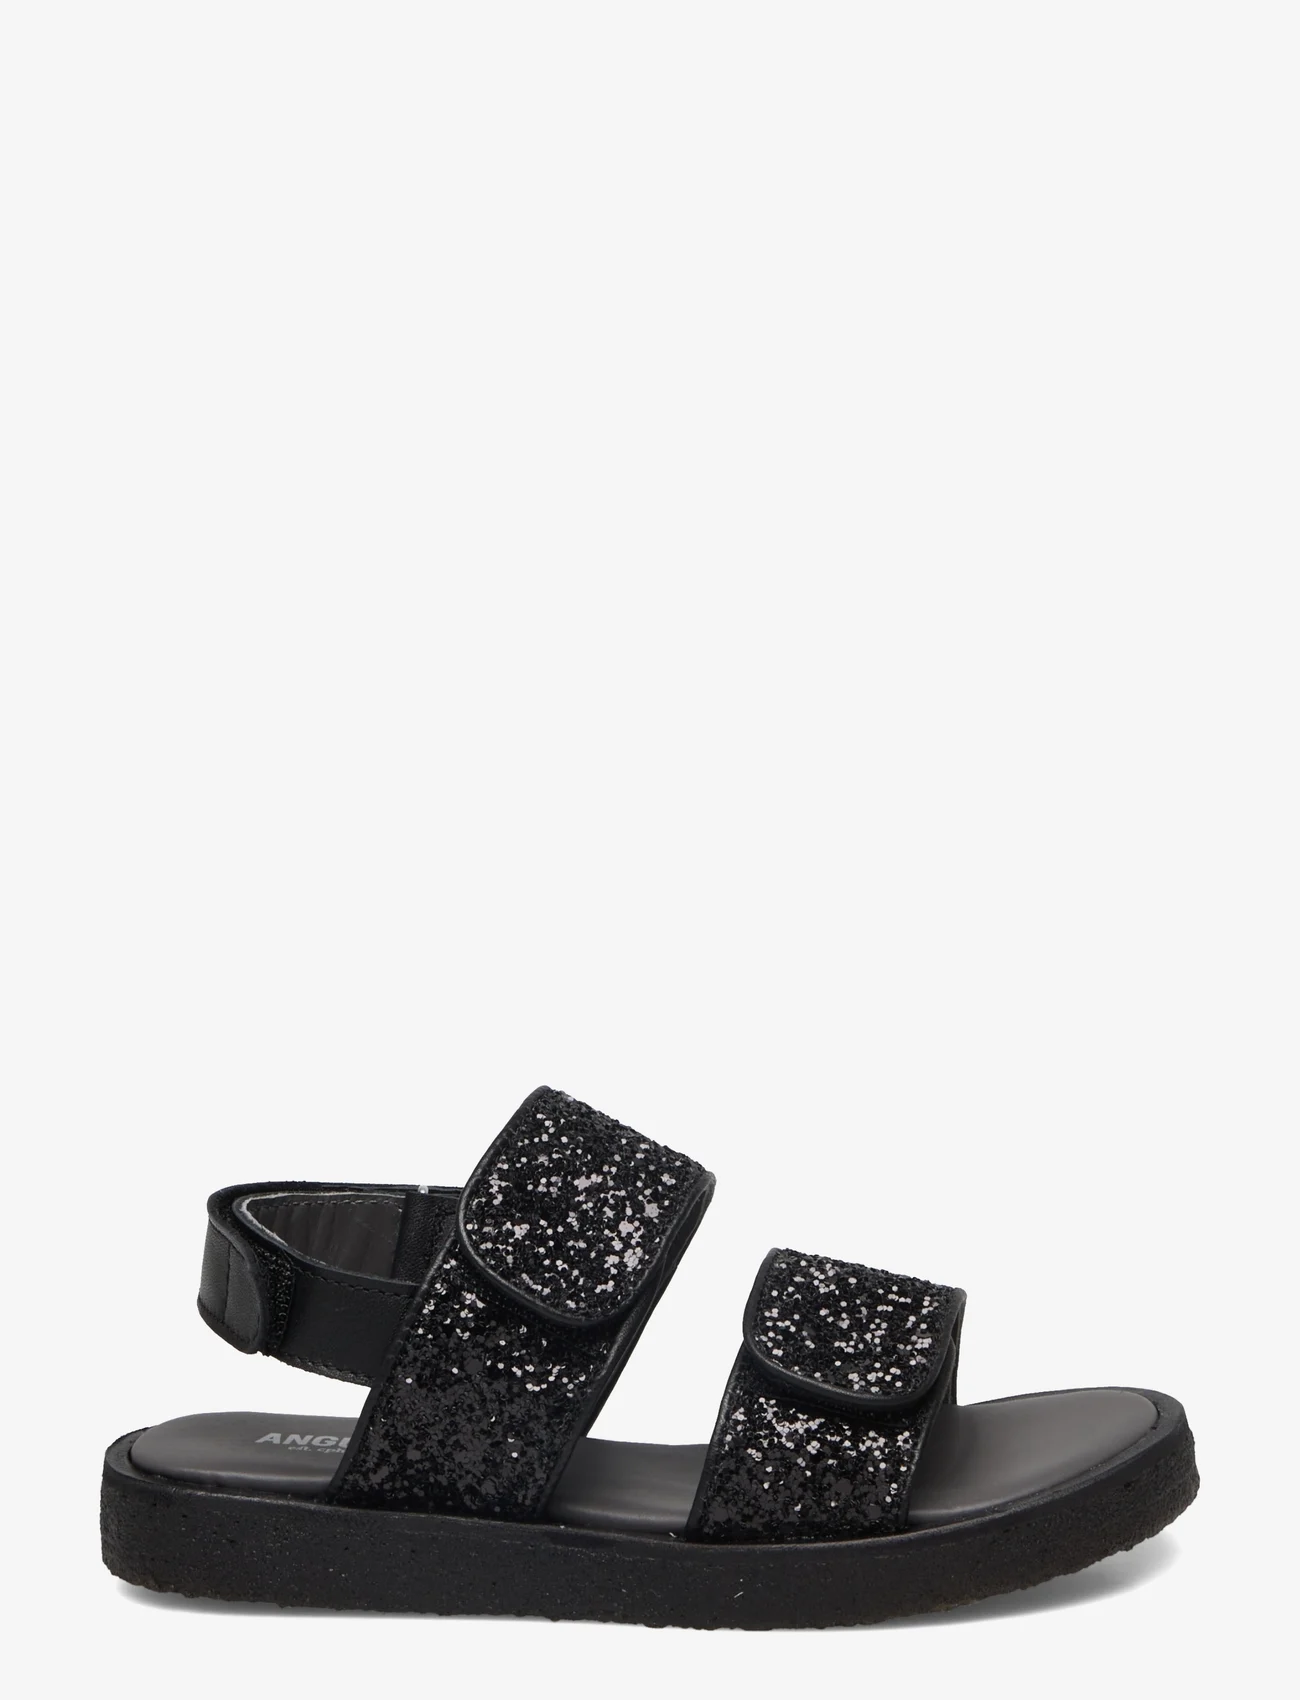 ANGULUS - Sandals - flat - open toe - op - sommarfynd - 1604/2486 black/black glitter - 1